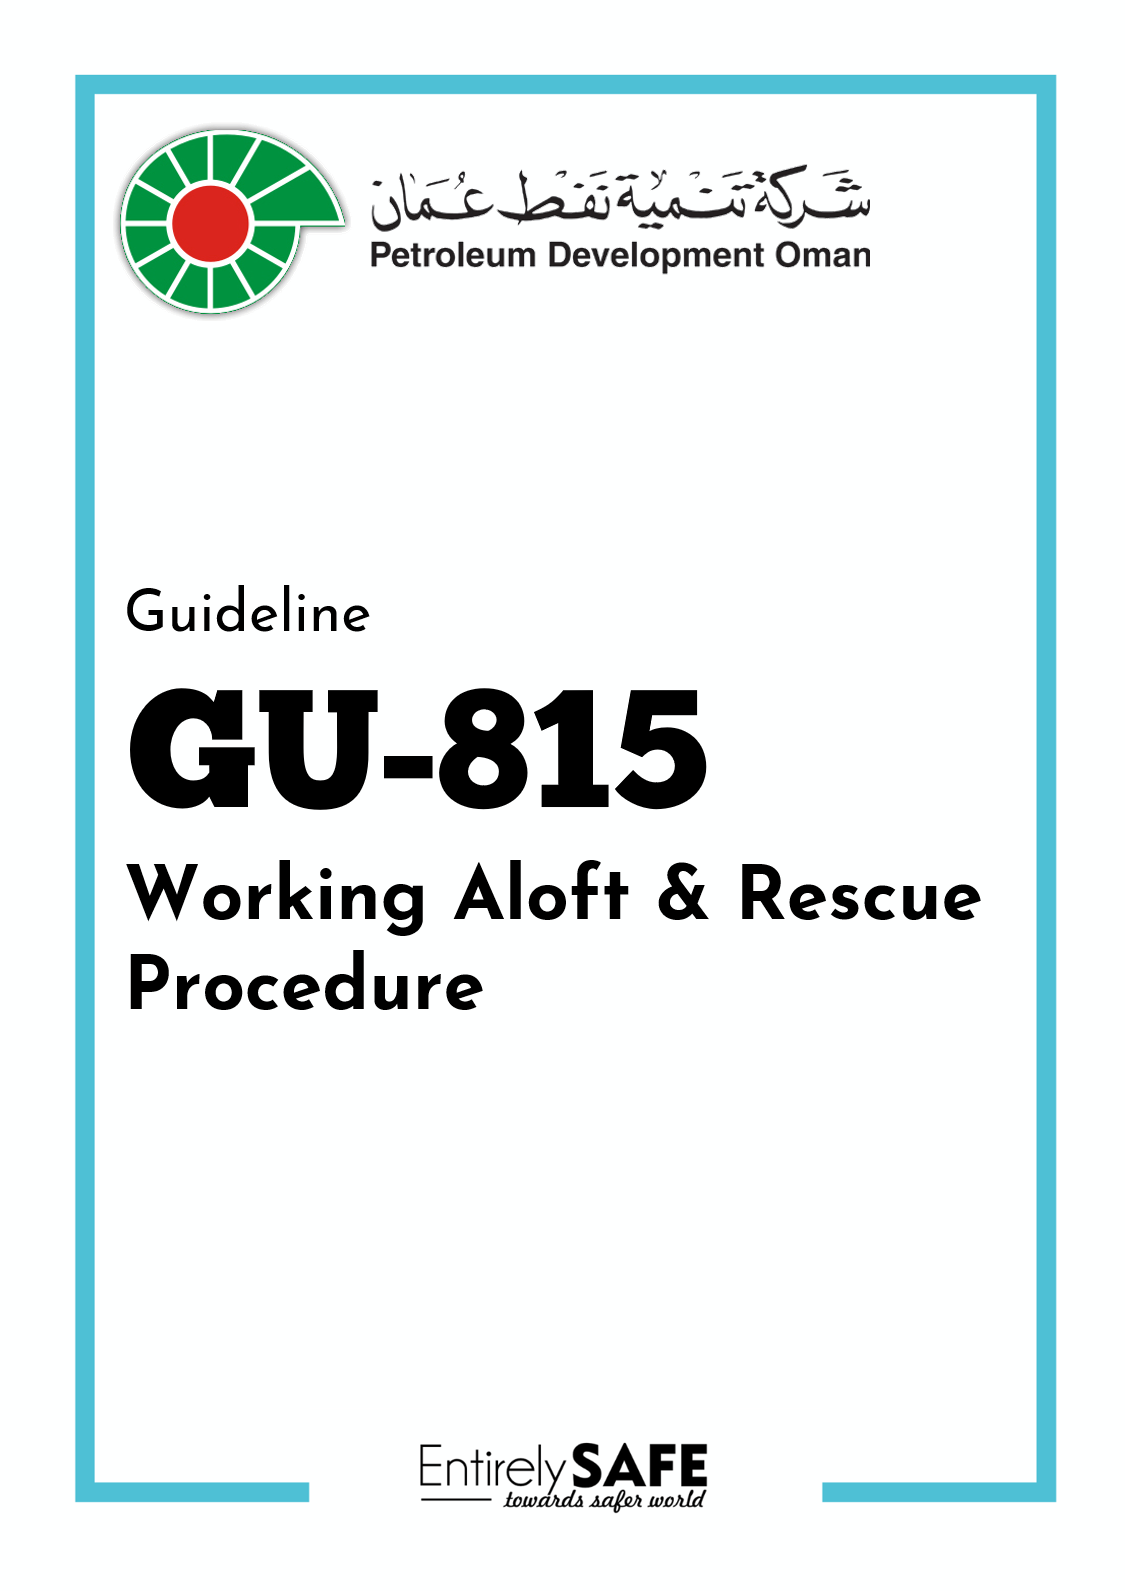 GU-815-Working-Aloft-&-Rescue-Procedure-PDO-download